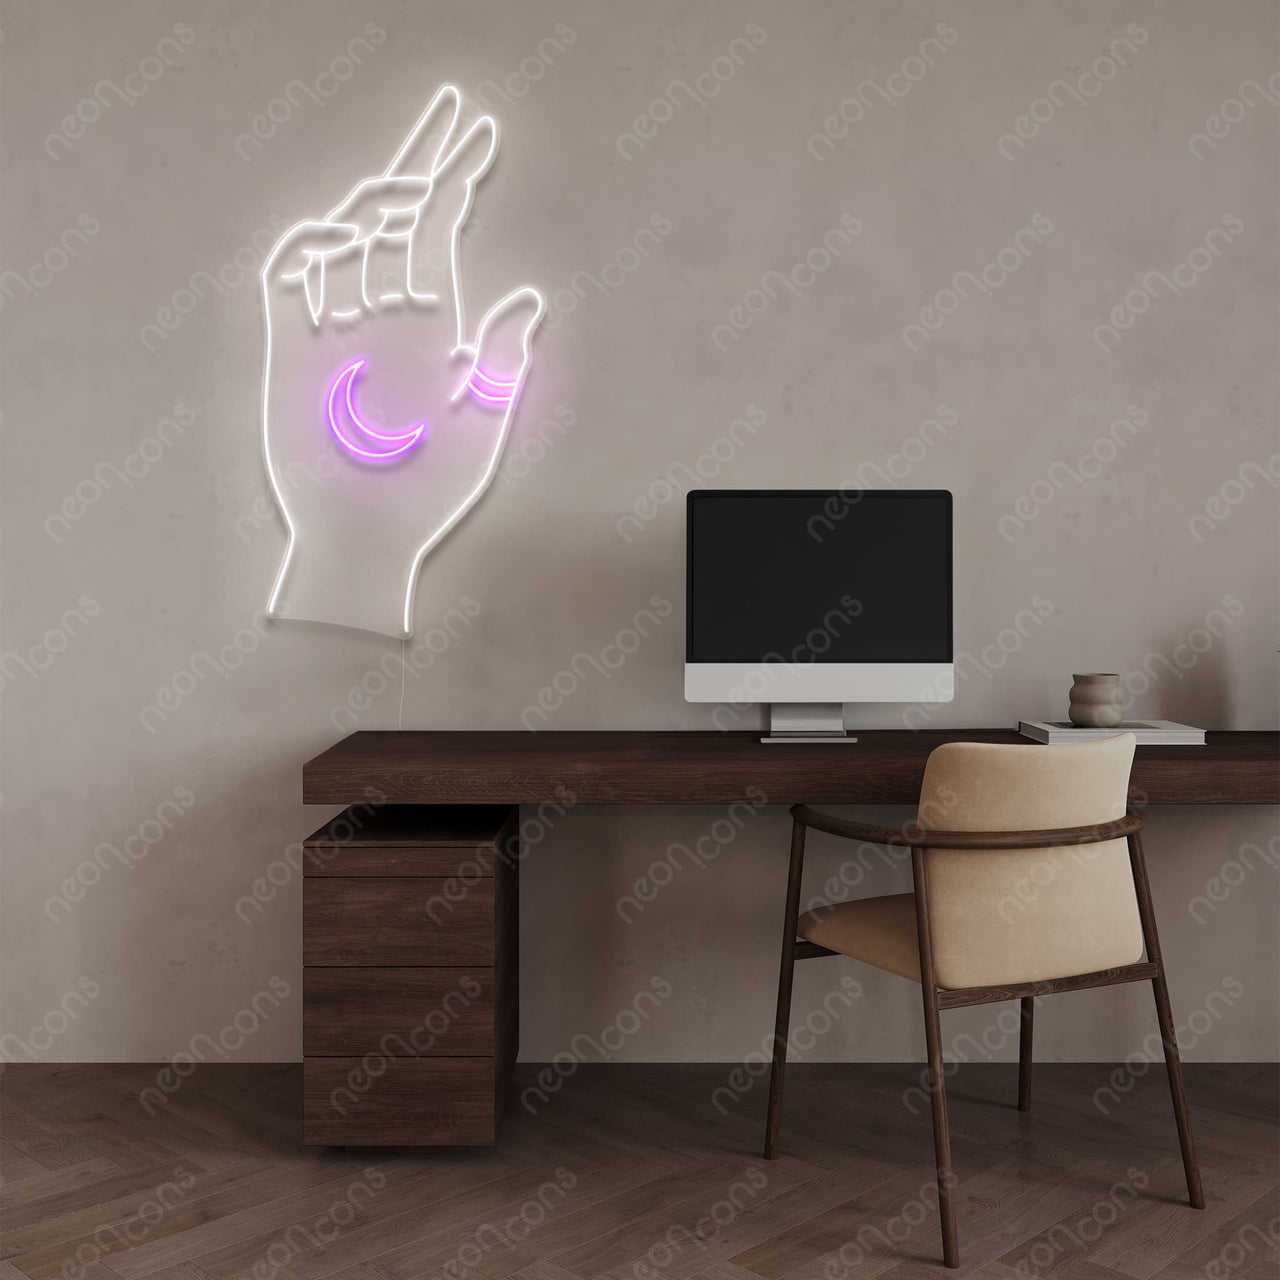 "Hand of Manifestation" LED Neon